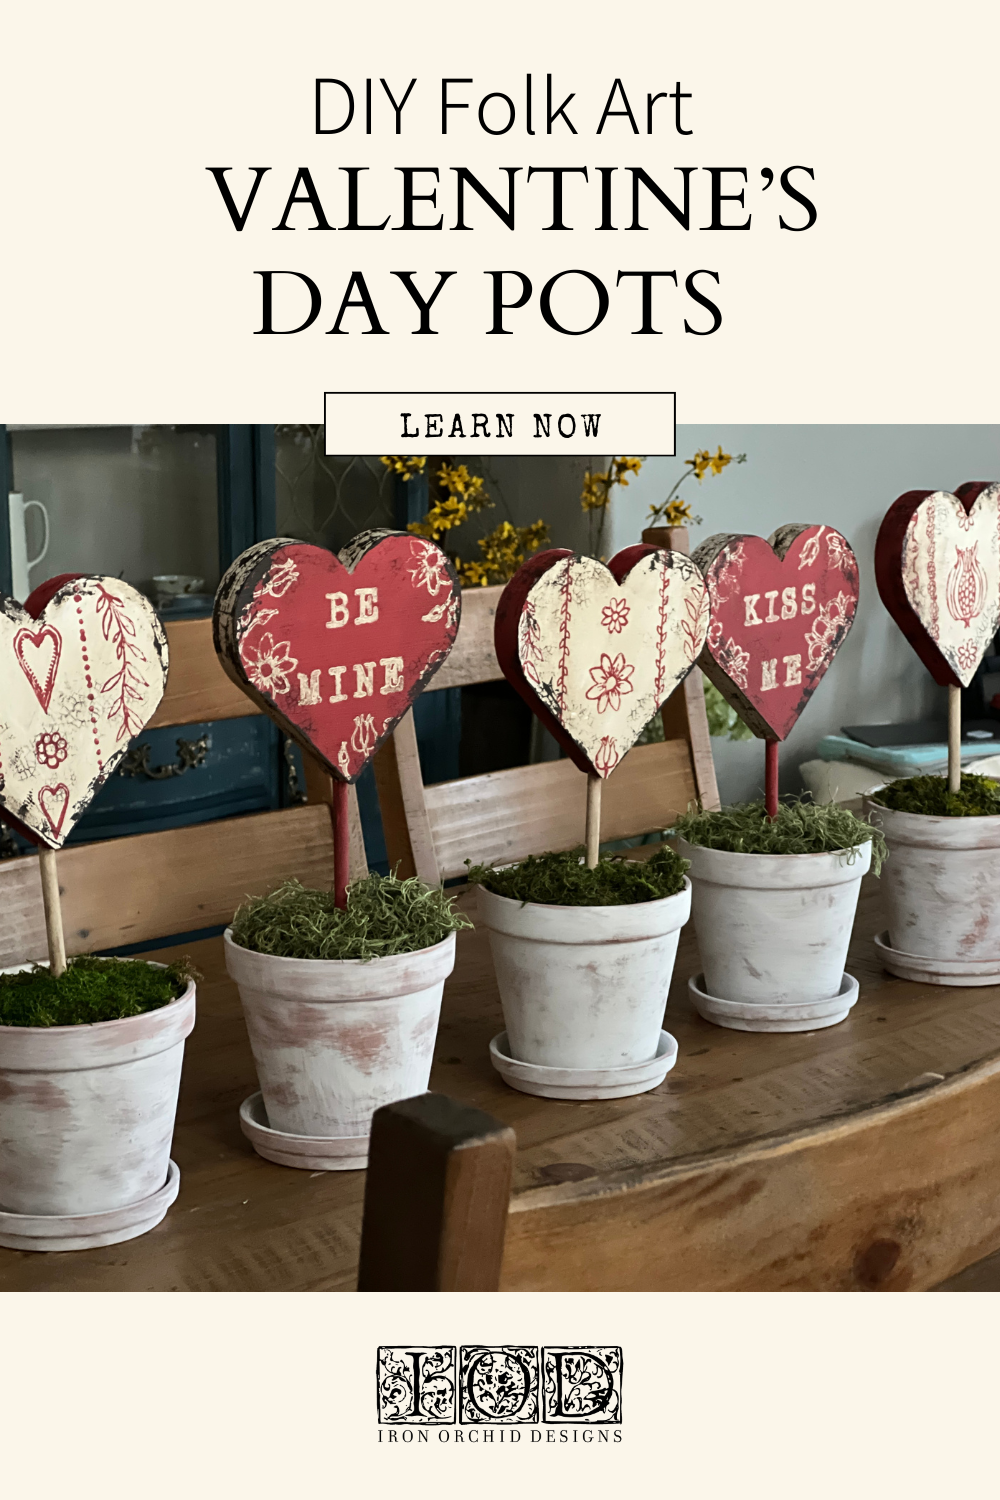 DIY Folk Art Valentine’s Day Pots Pin Cover